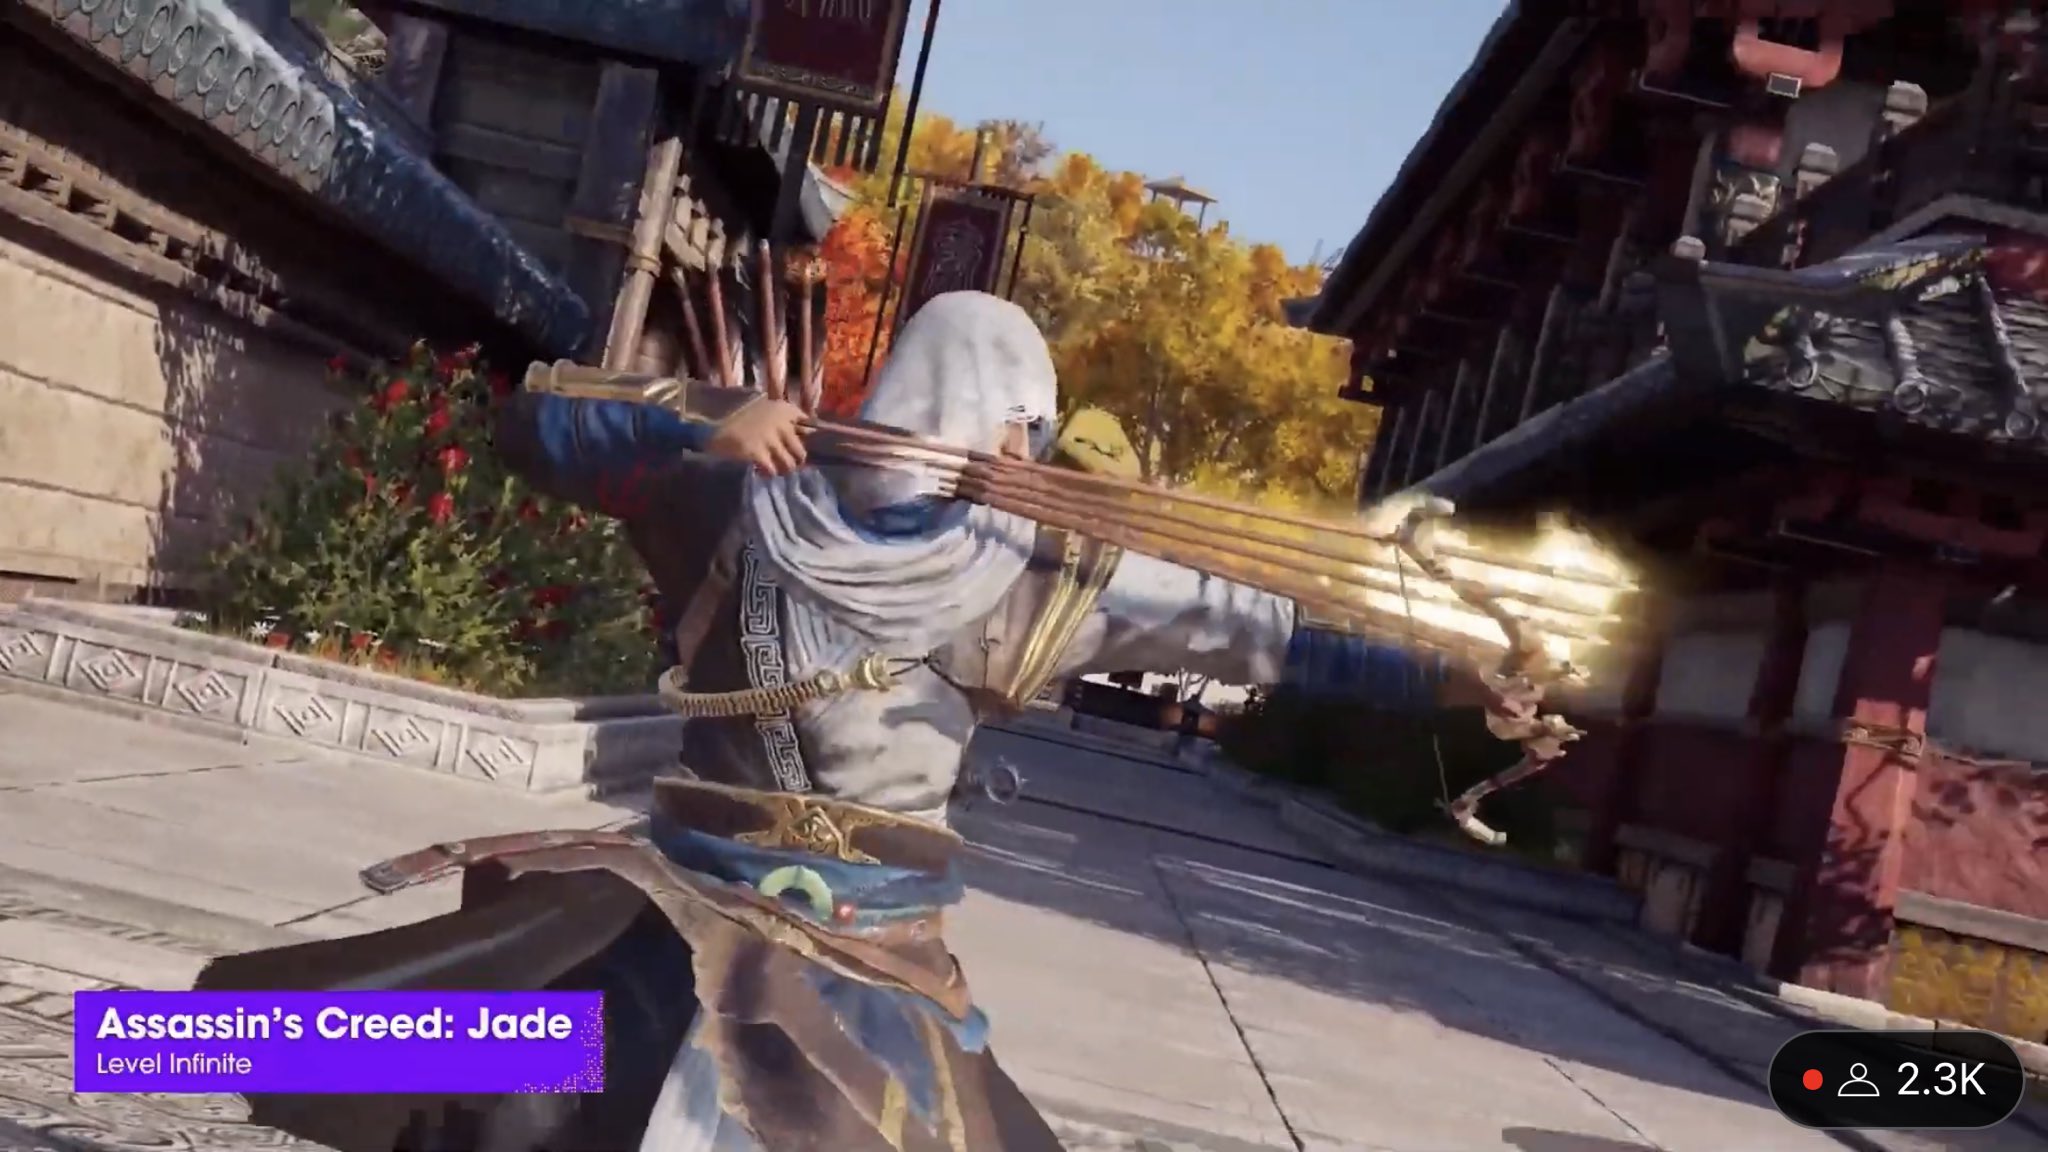 Assassin's Creed: Jade - Gameplay Trailer